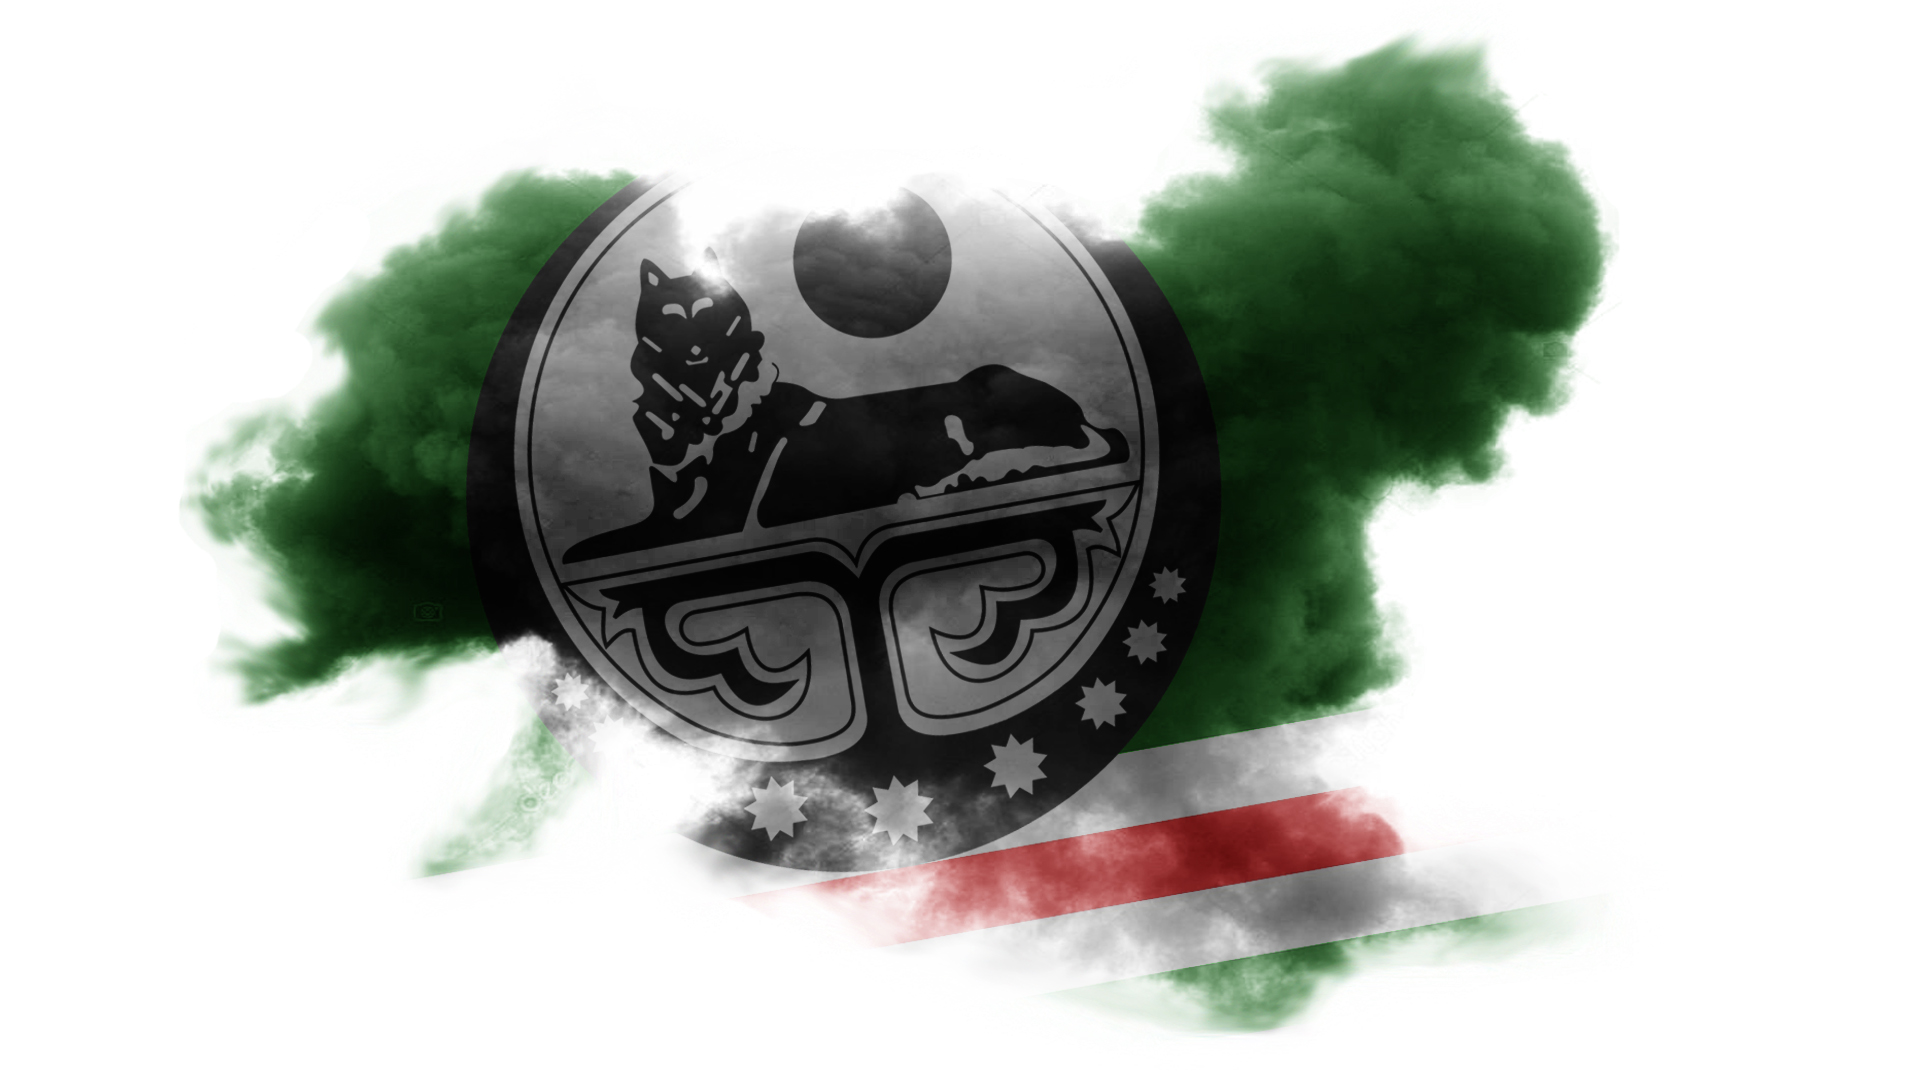 841964 descargar imagen miscelaneo, bandera de chechenia: fondos de pantalla y protectores de pantalla gratis